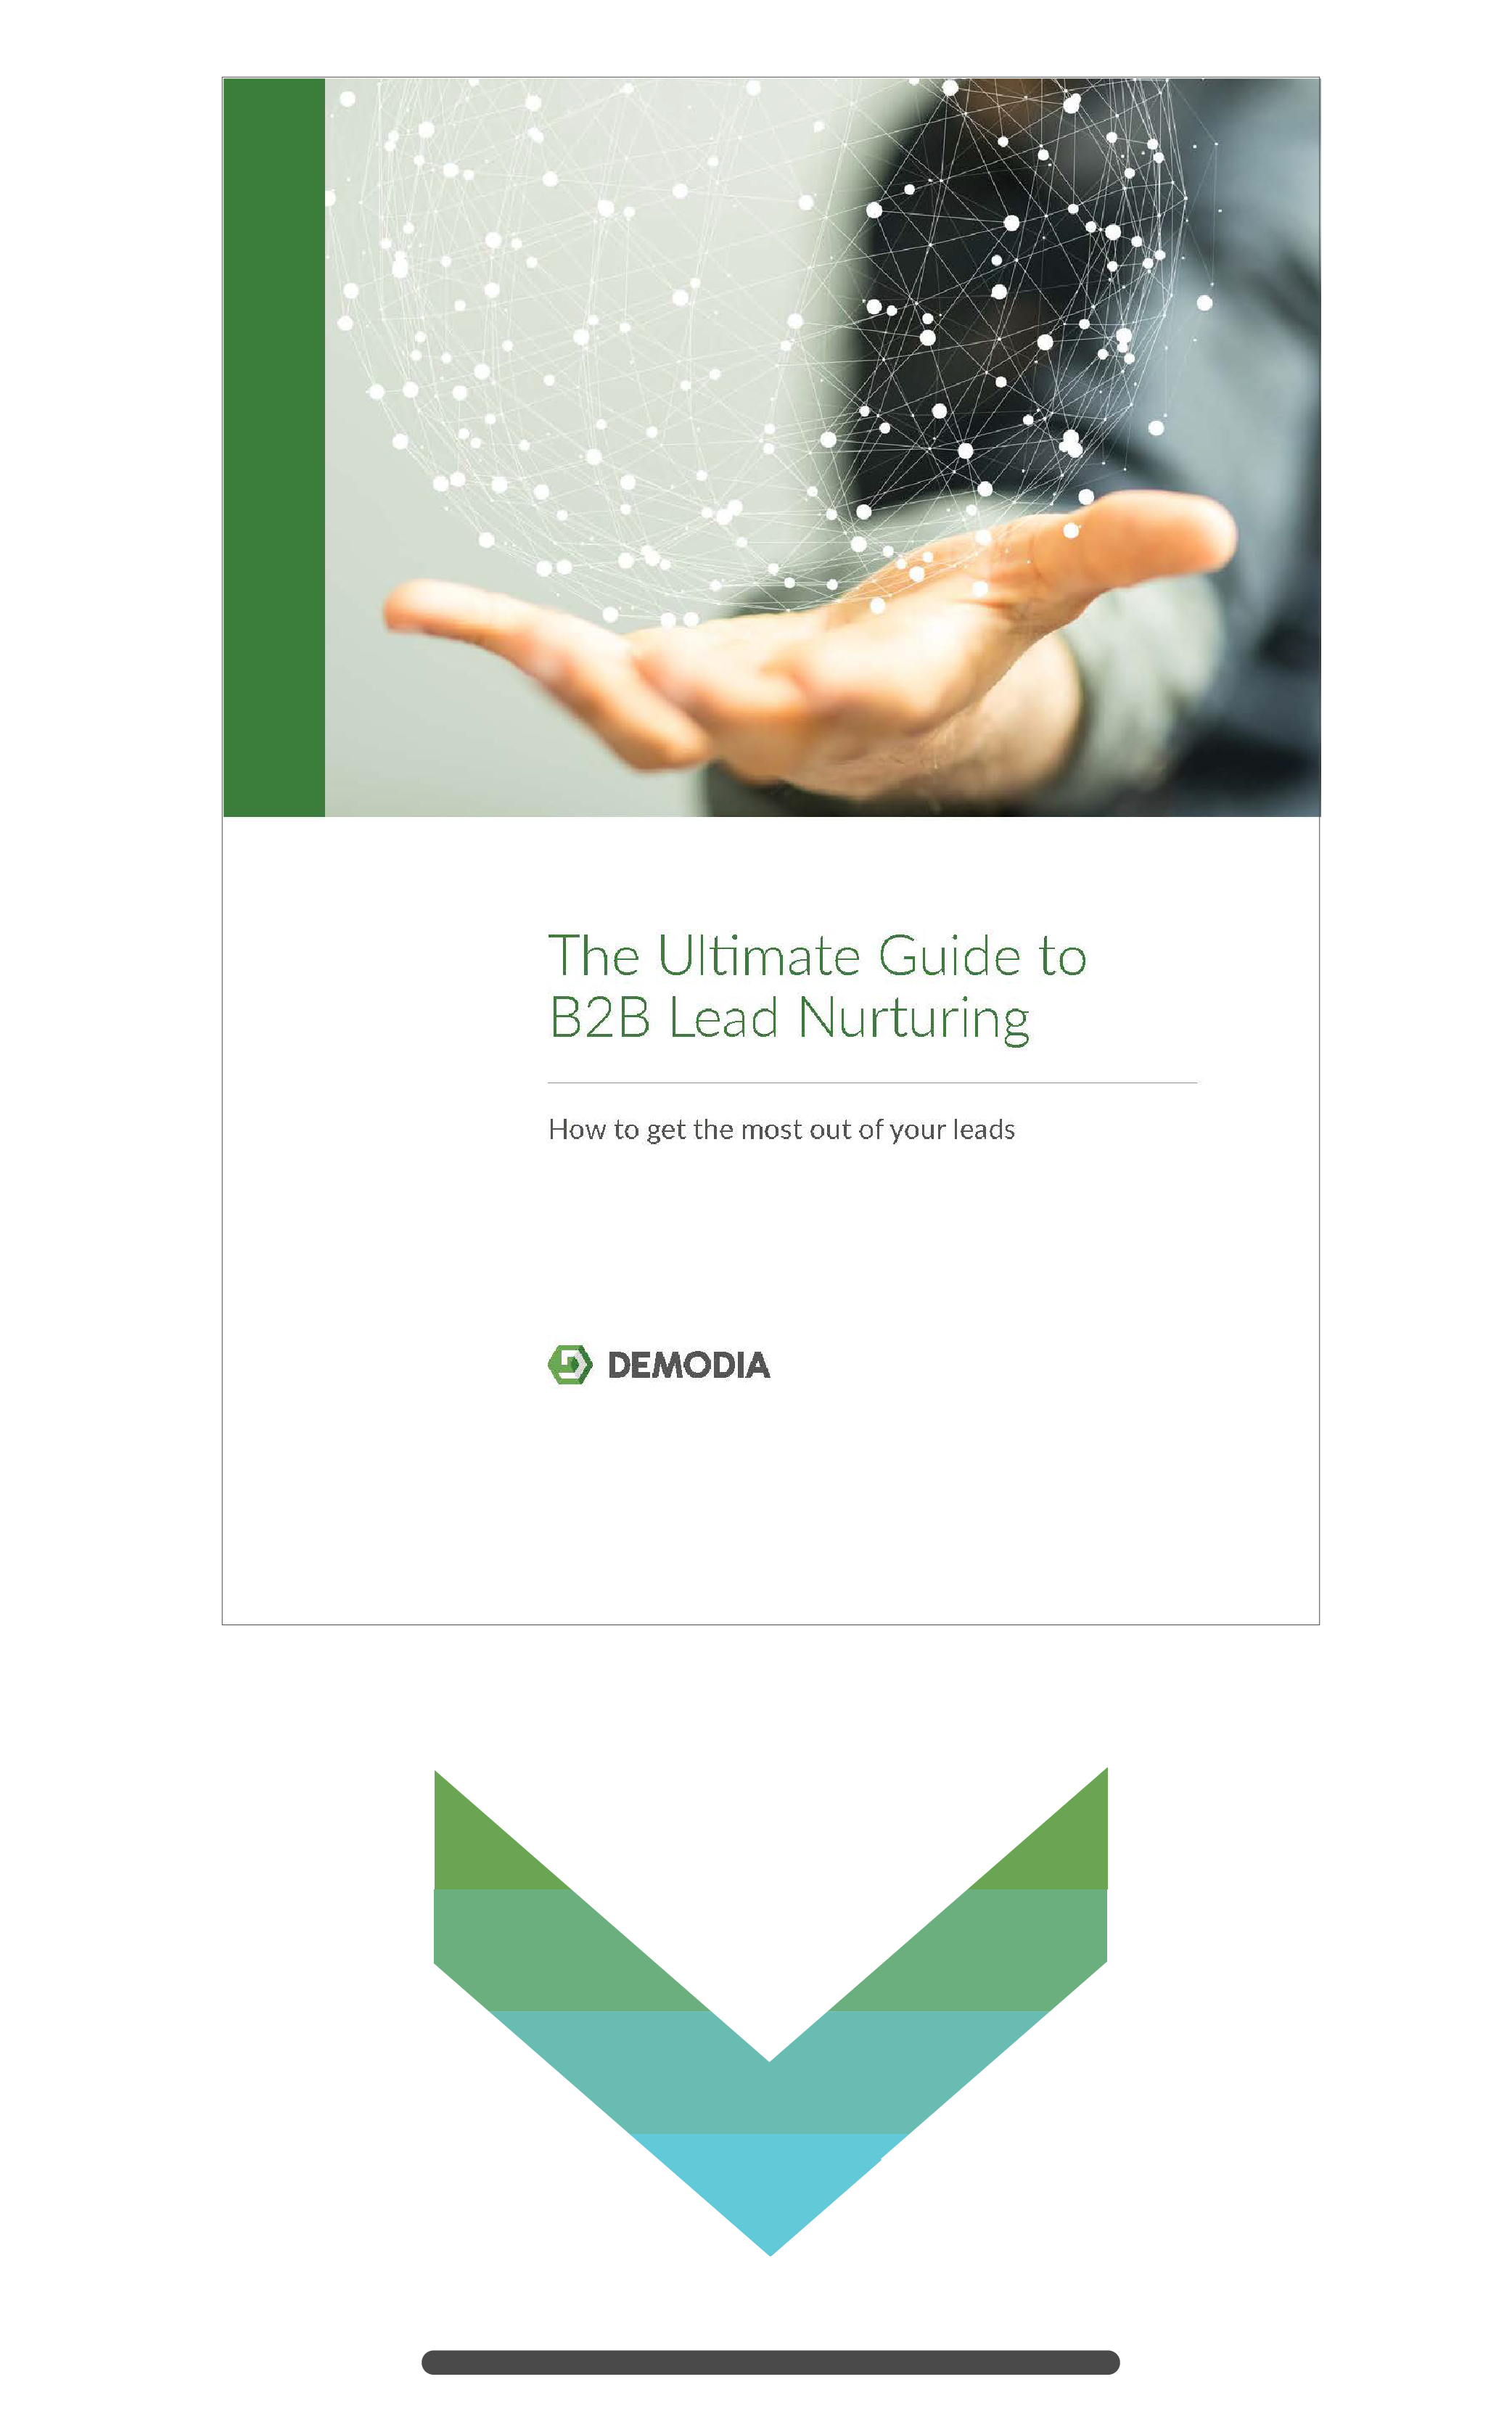 Demodia Guide to Lead Nurturing download